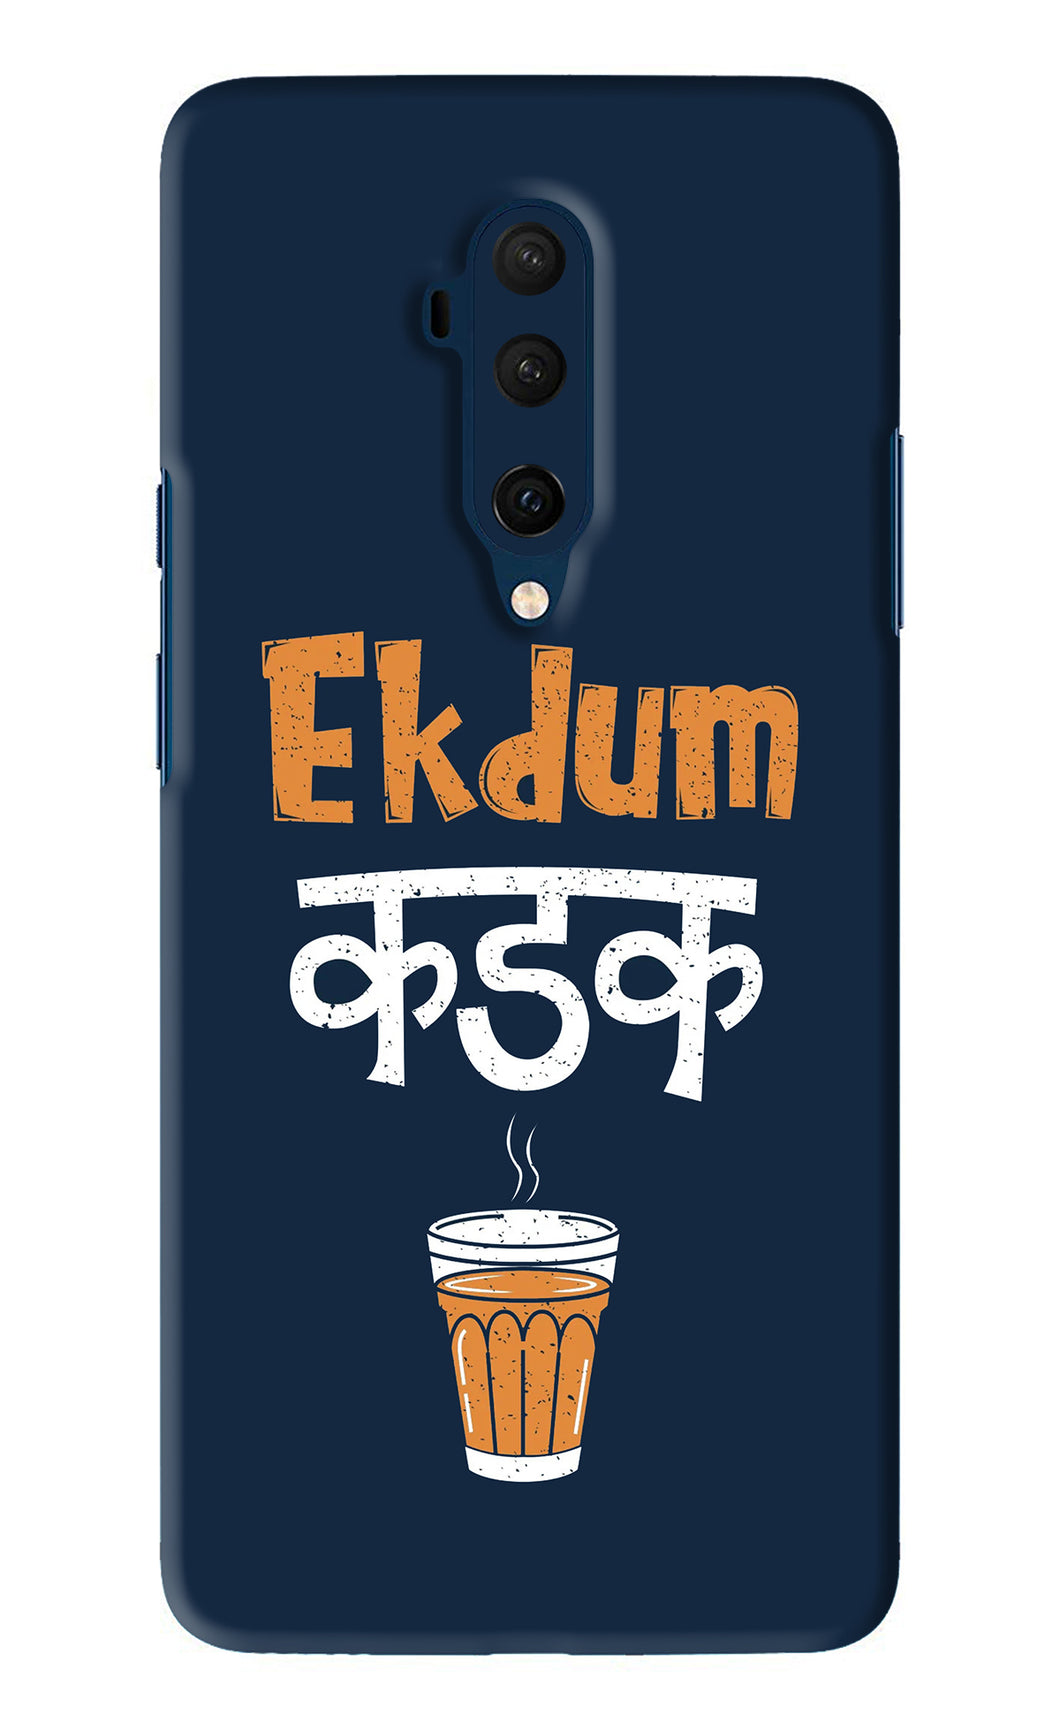 Ekdum Kadak Chai OnePlus 7T Pro Back Skin Wrap